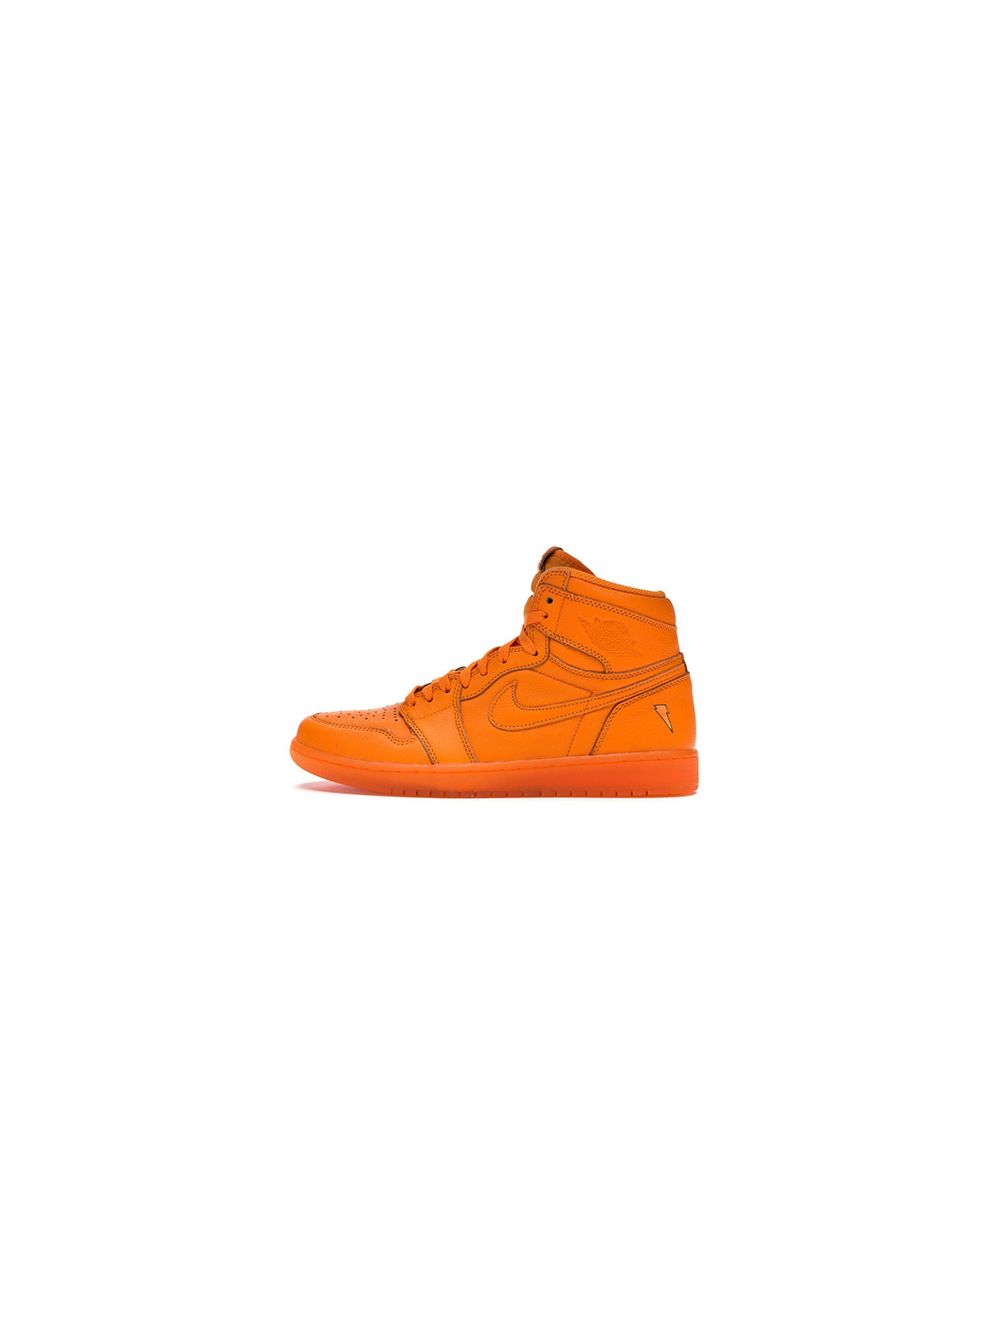 1:1 Replica Gatorade Jordan High "Orange Peel" Sale| PopKicks.org